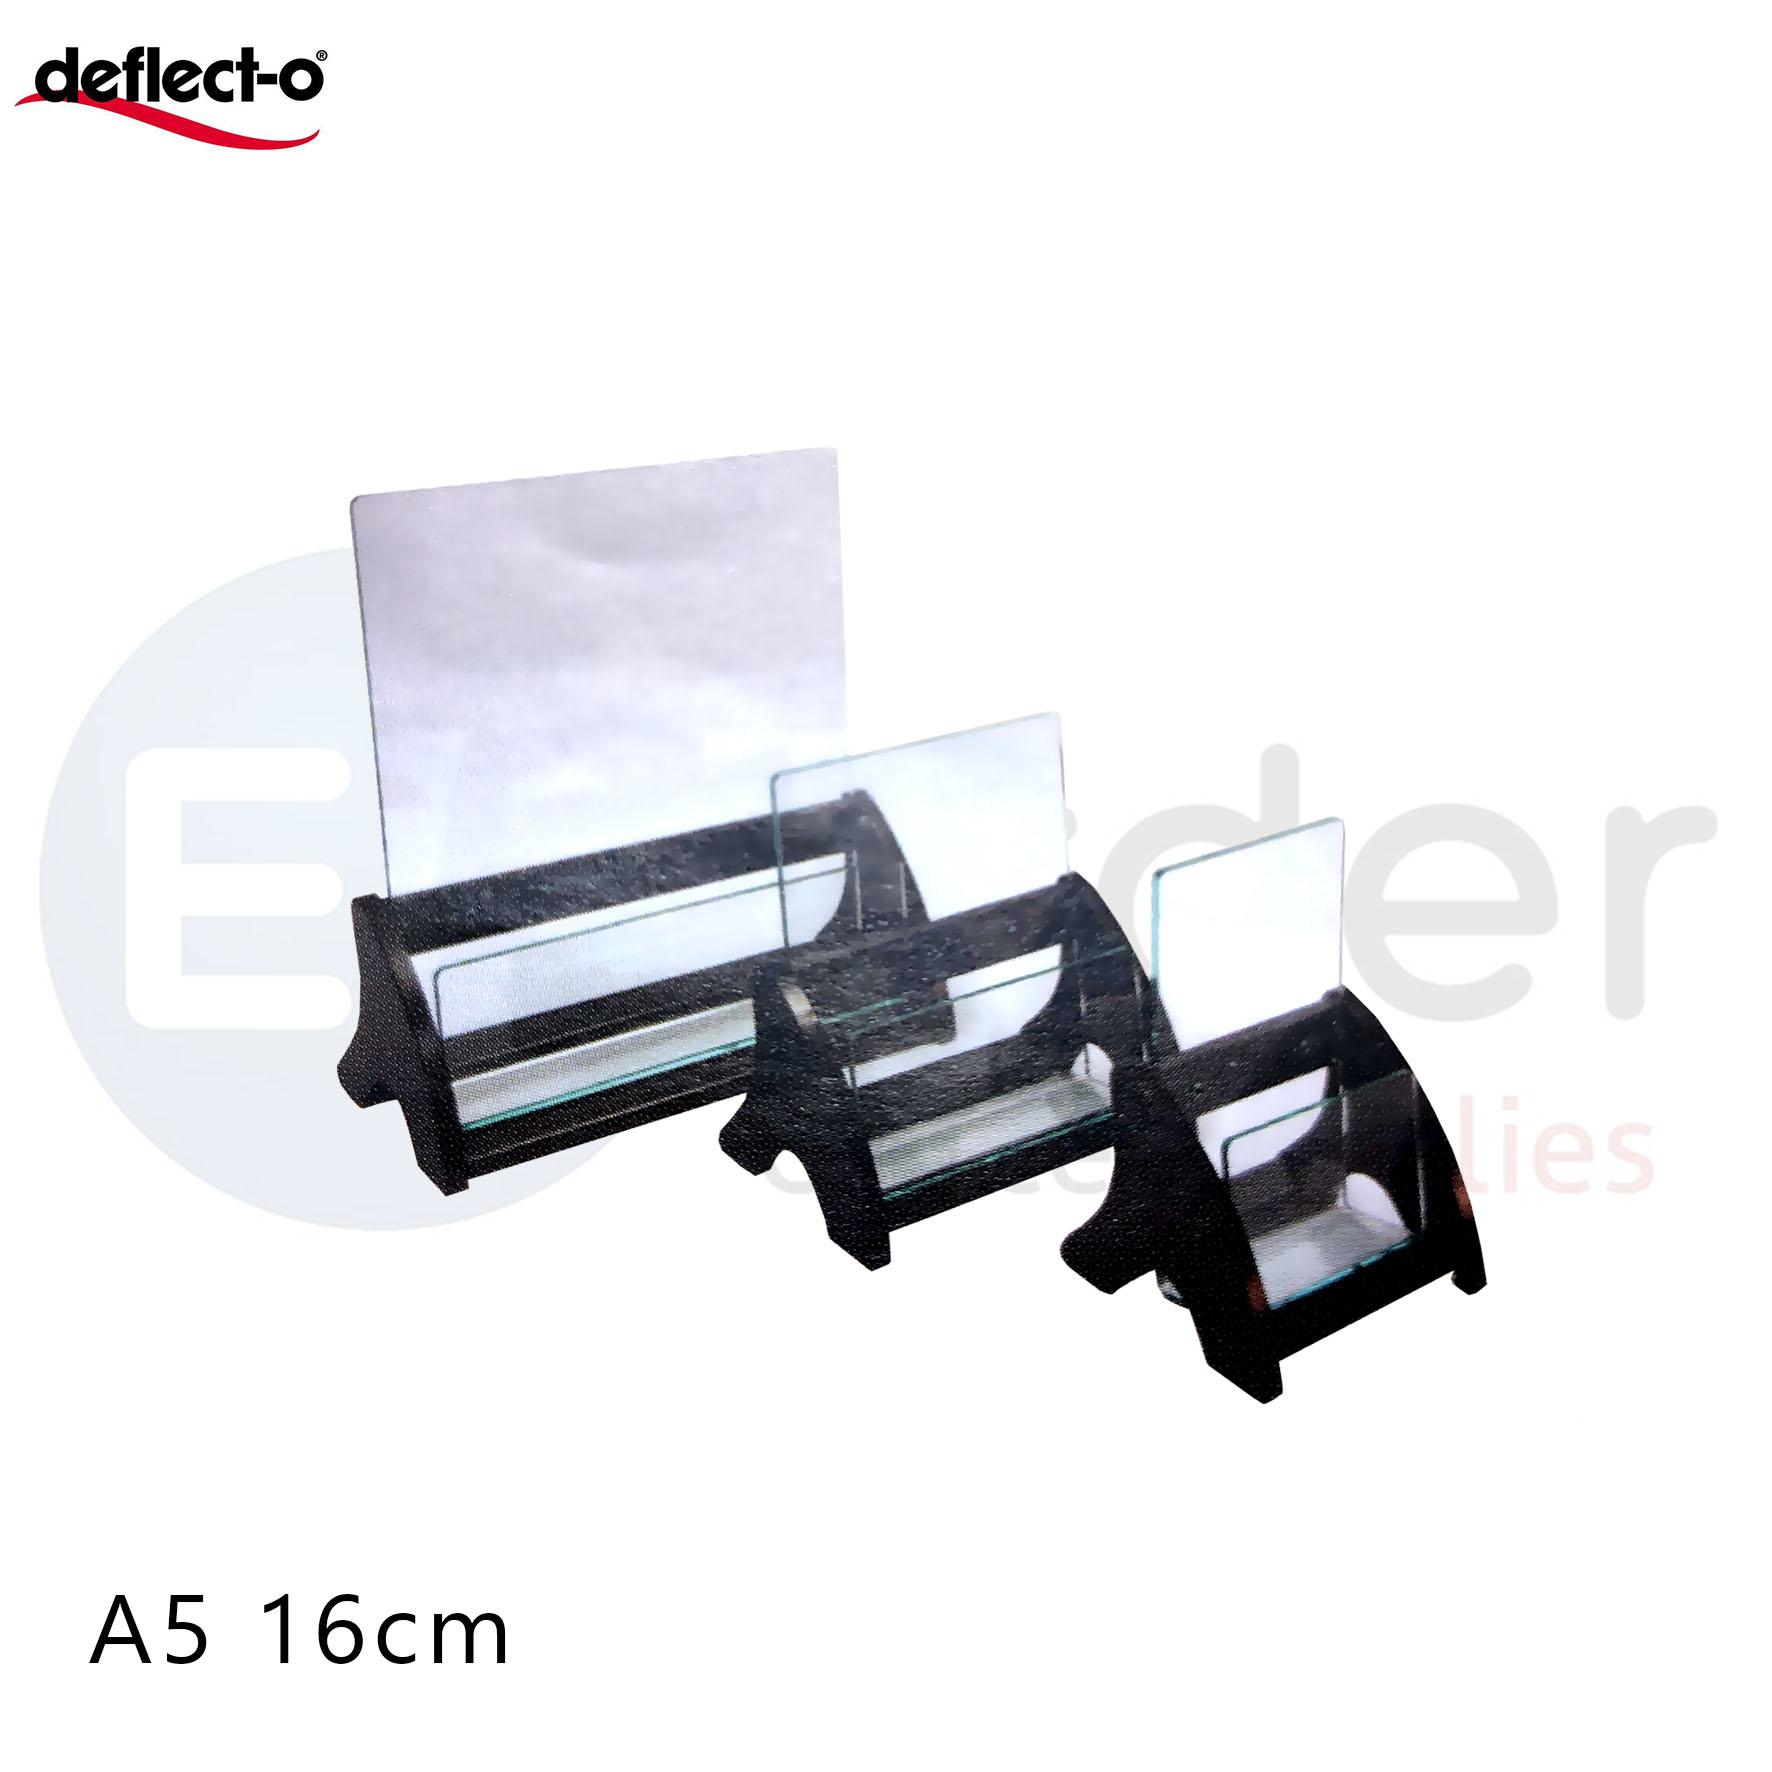 Deflecto wood&acrylicBrochure holder,A5